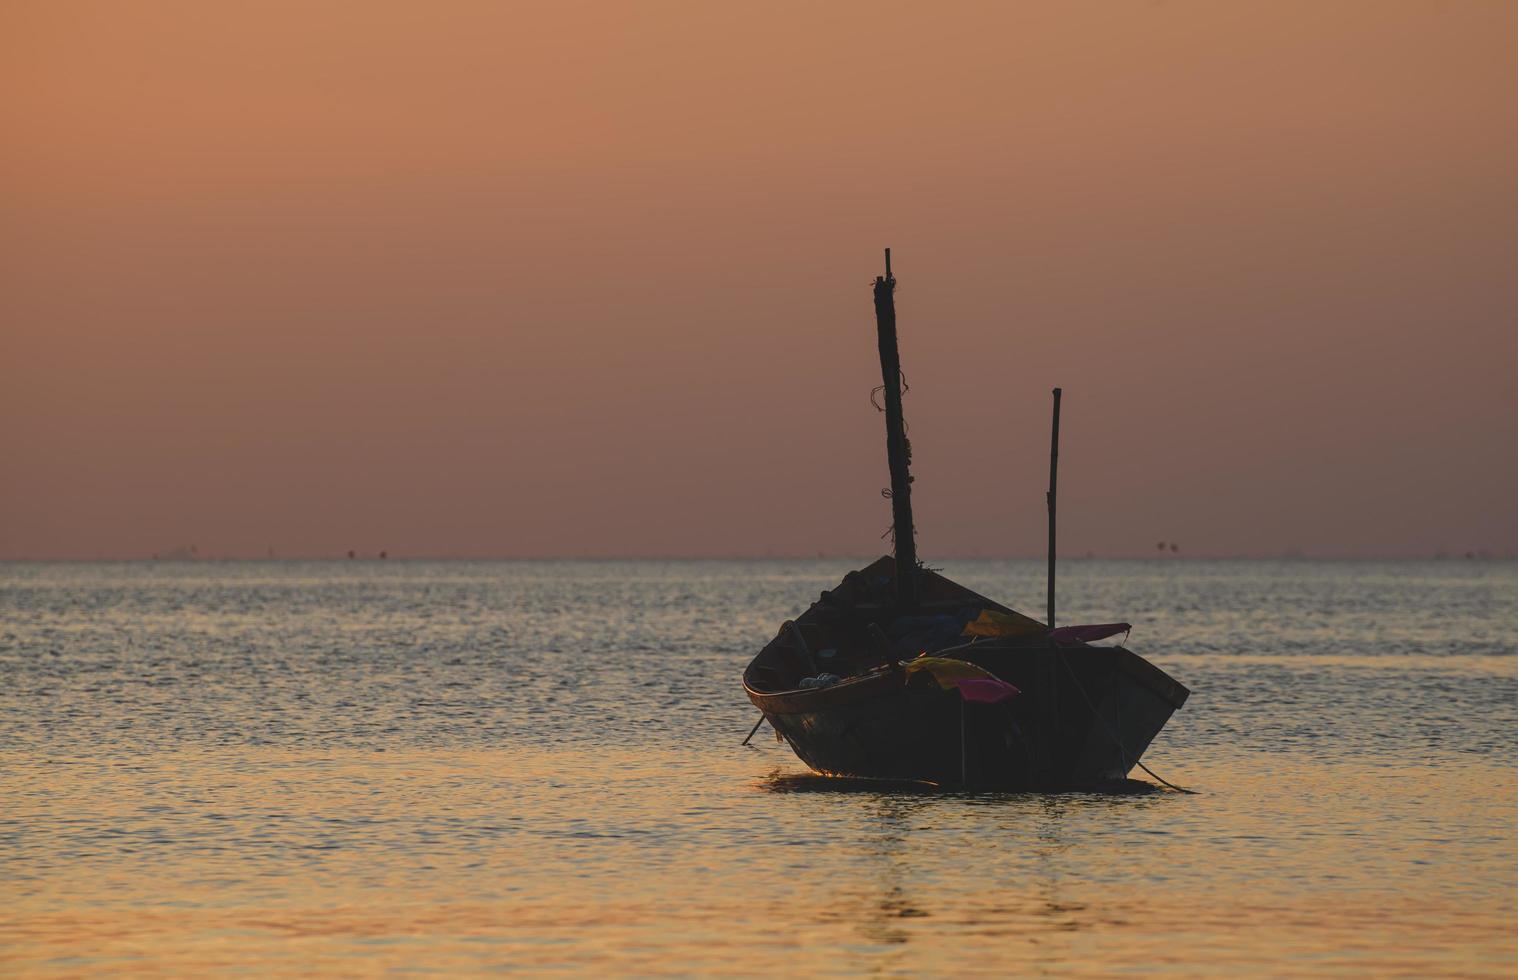 Fischerei Holzboot mit Sonnenuntergang Himmel schwacher Beleuchtung. foto